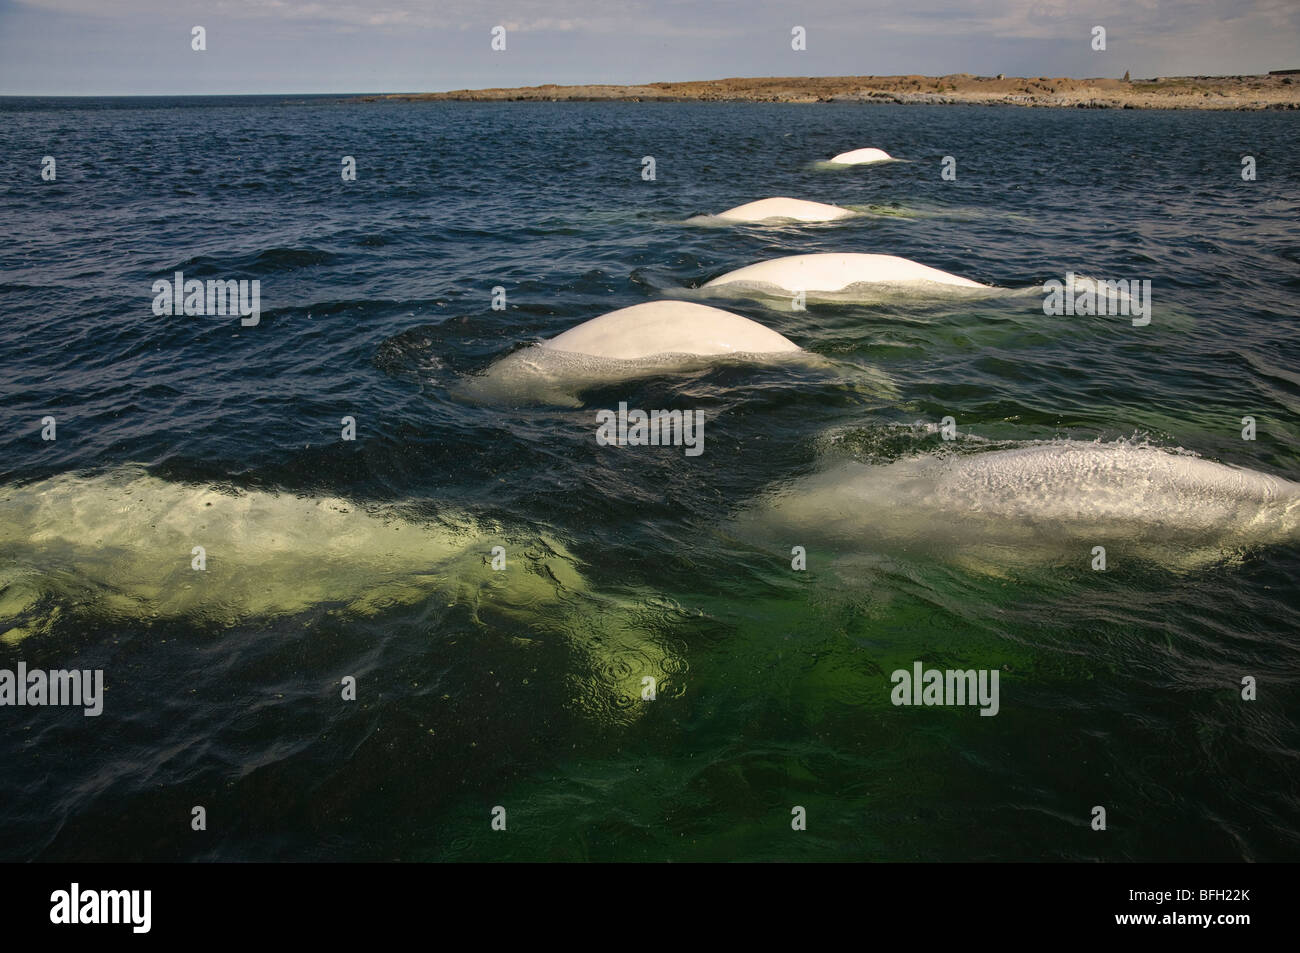 Beluga whales, Delphinapterus leucas, in summer near the Churchill River estuary, Hudson Bay, Canada Stock Photo